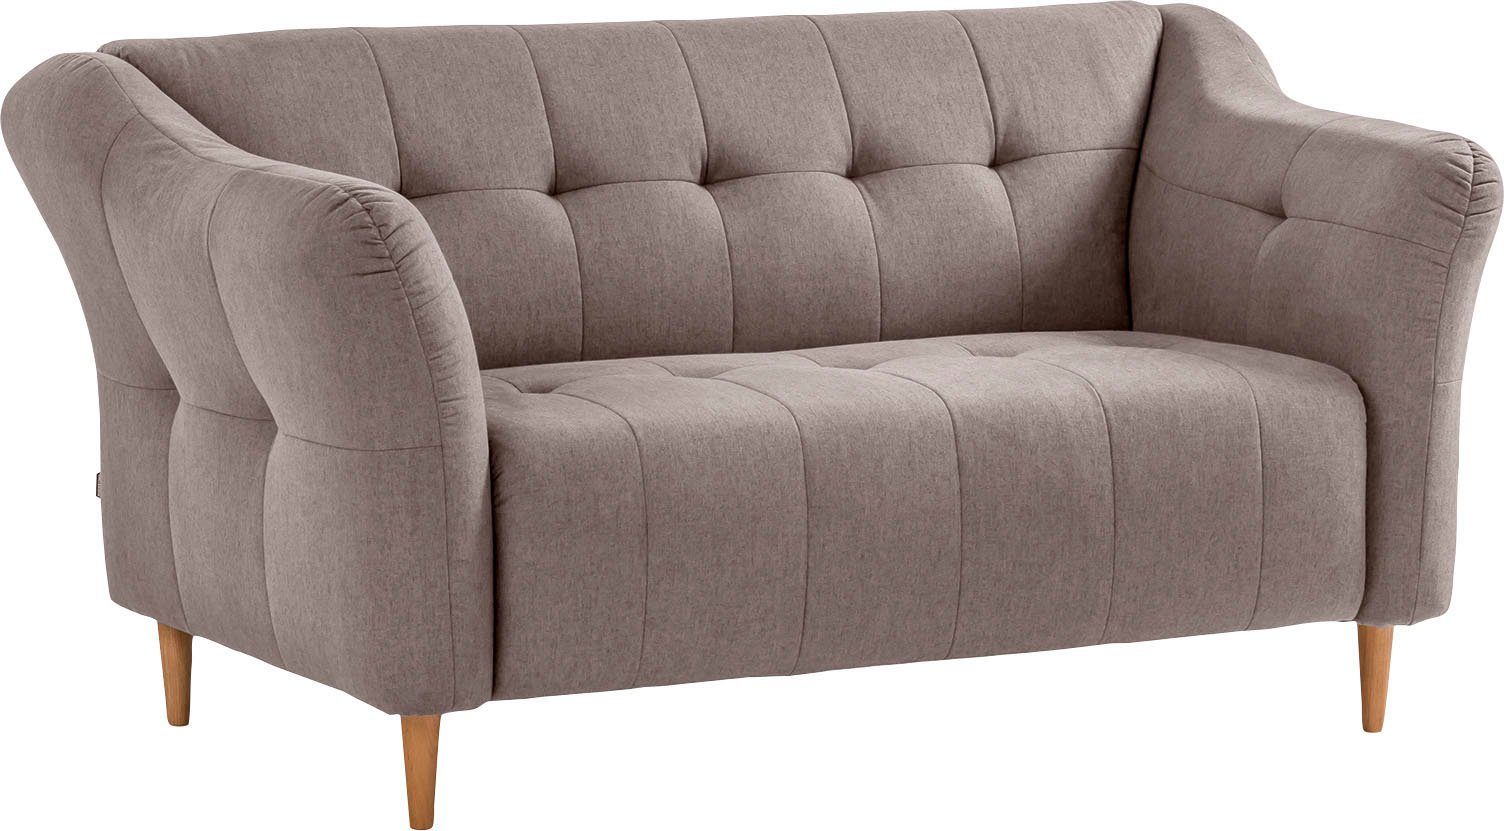 frei 2-Sitzer - mit Soraya, sofa im Holzfüßen, exxpo stellbar Raum fashion